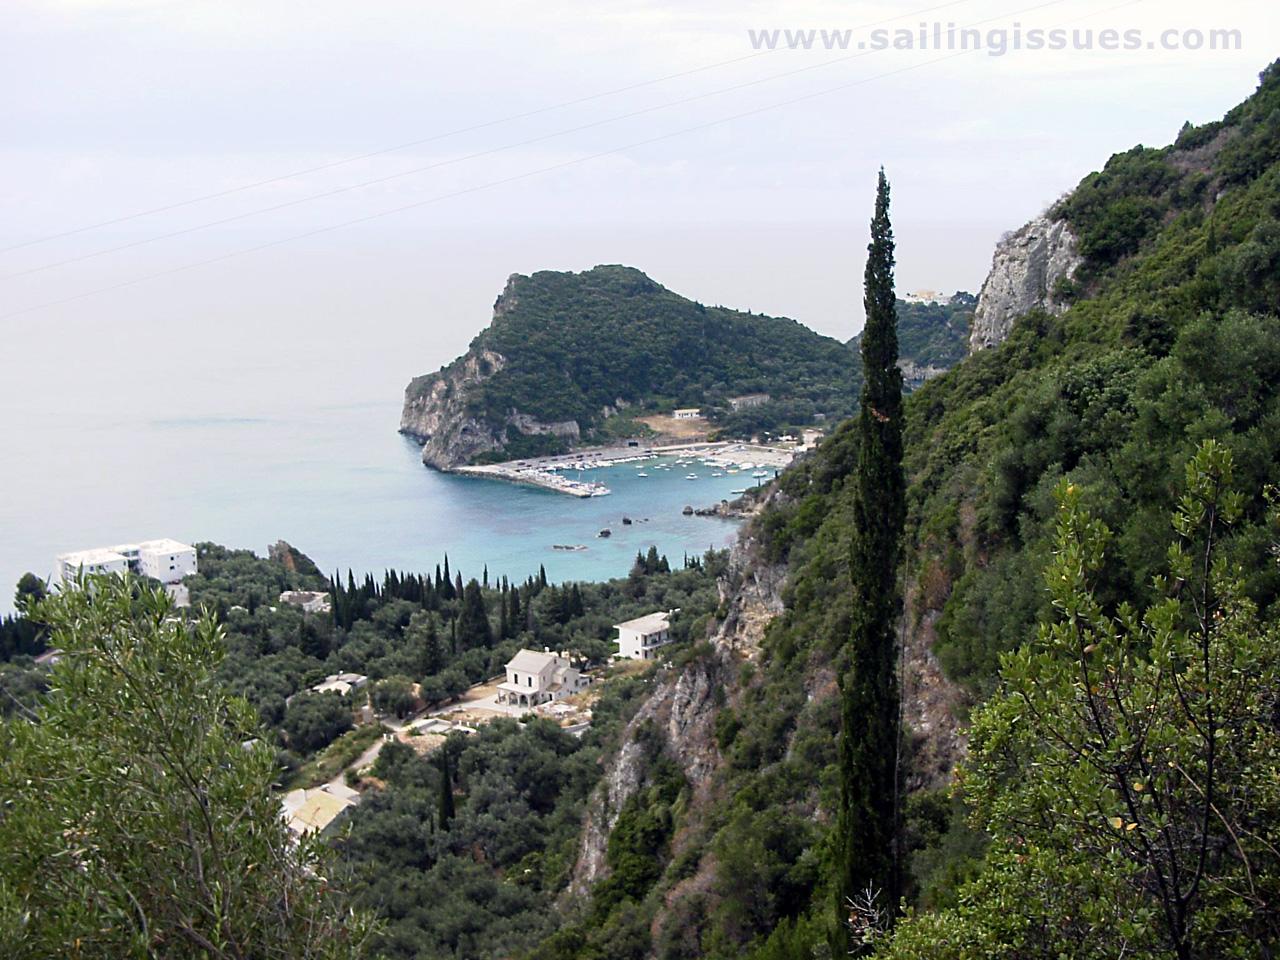 Corfu island: Paliokastritsa port - 1280 x 960 desktop wallpaper